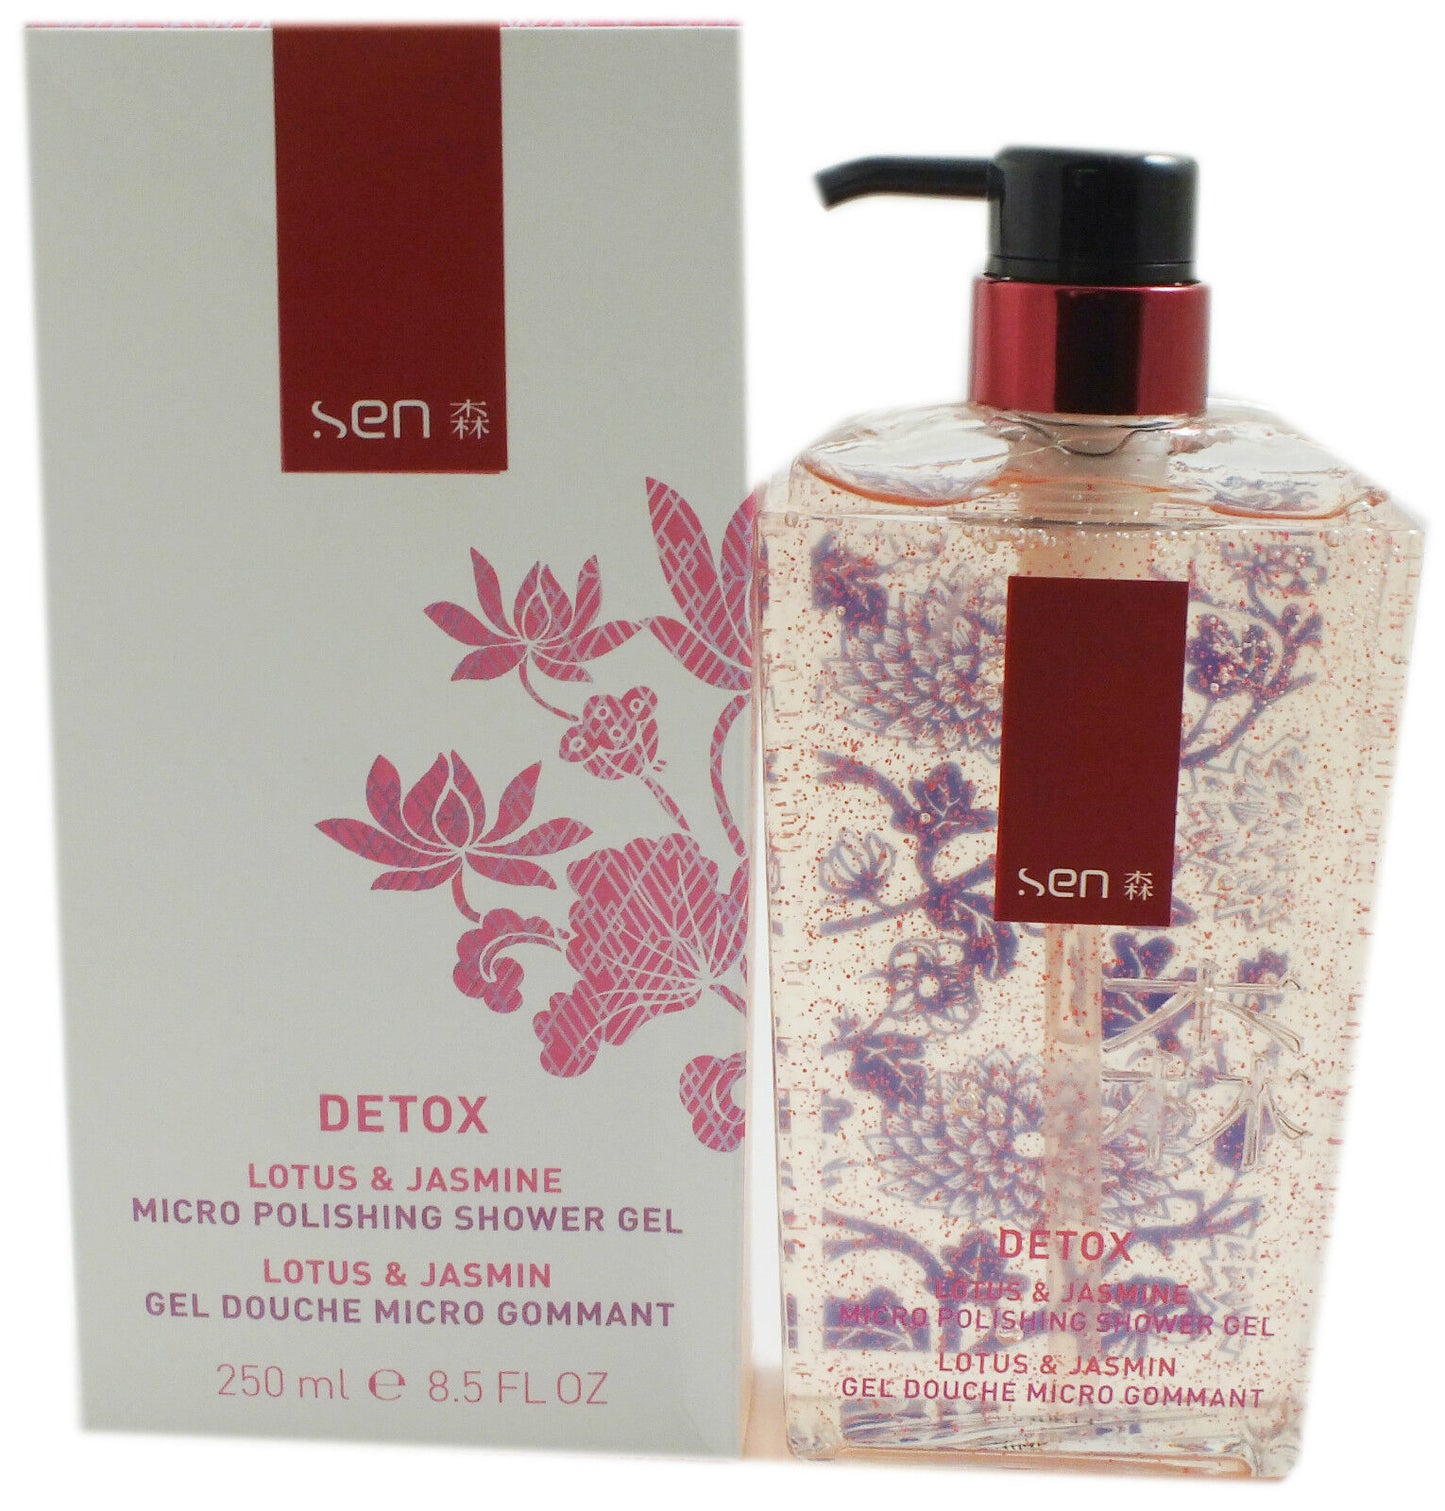 Sen Detox Lotus & Jasmine Micro Polishing Shower Gel 250ml